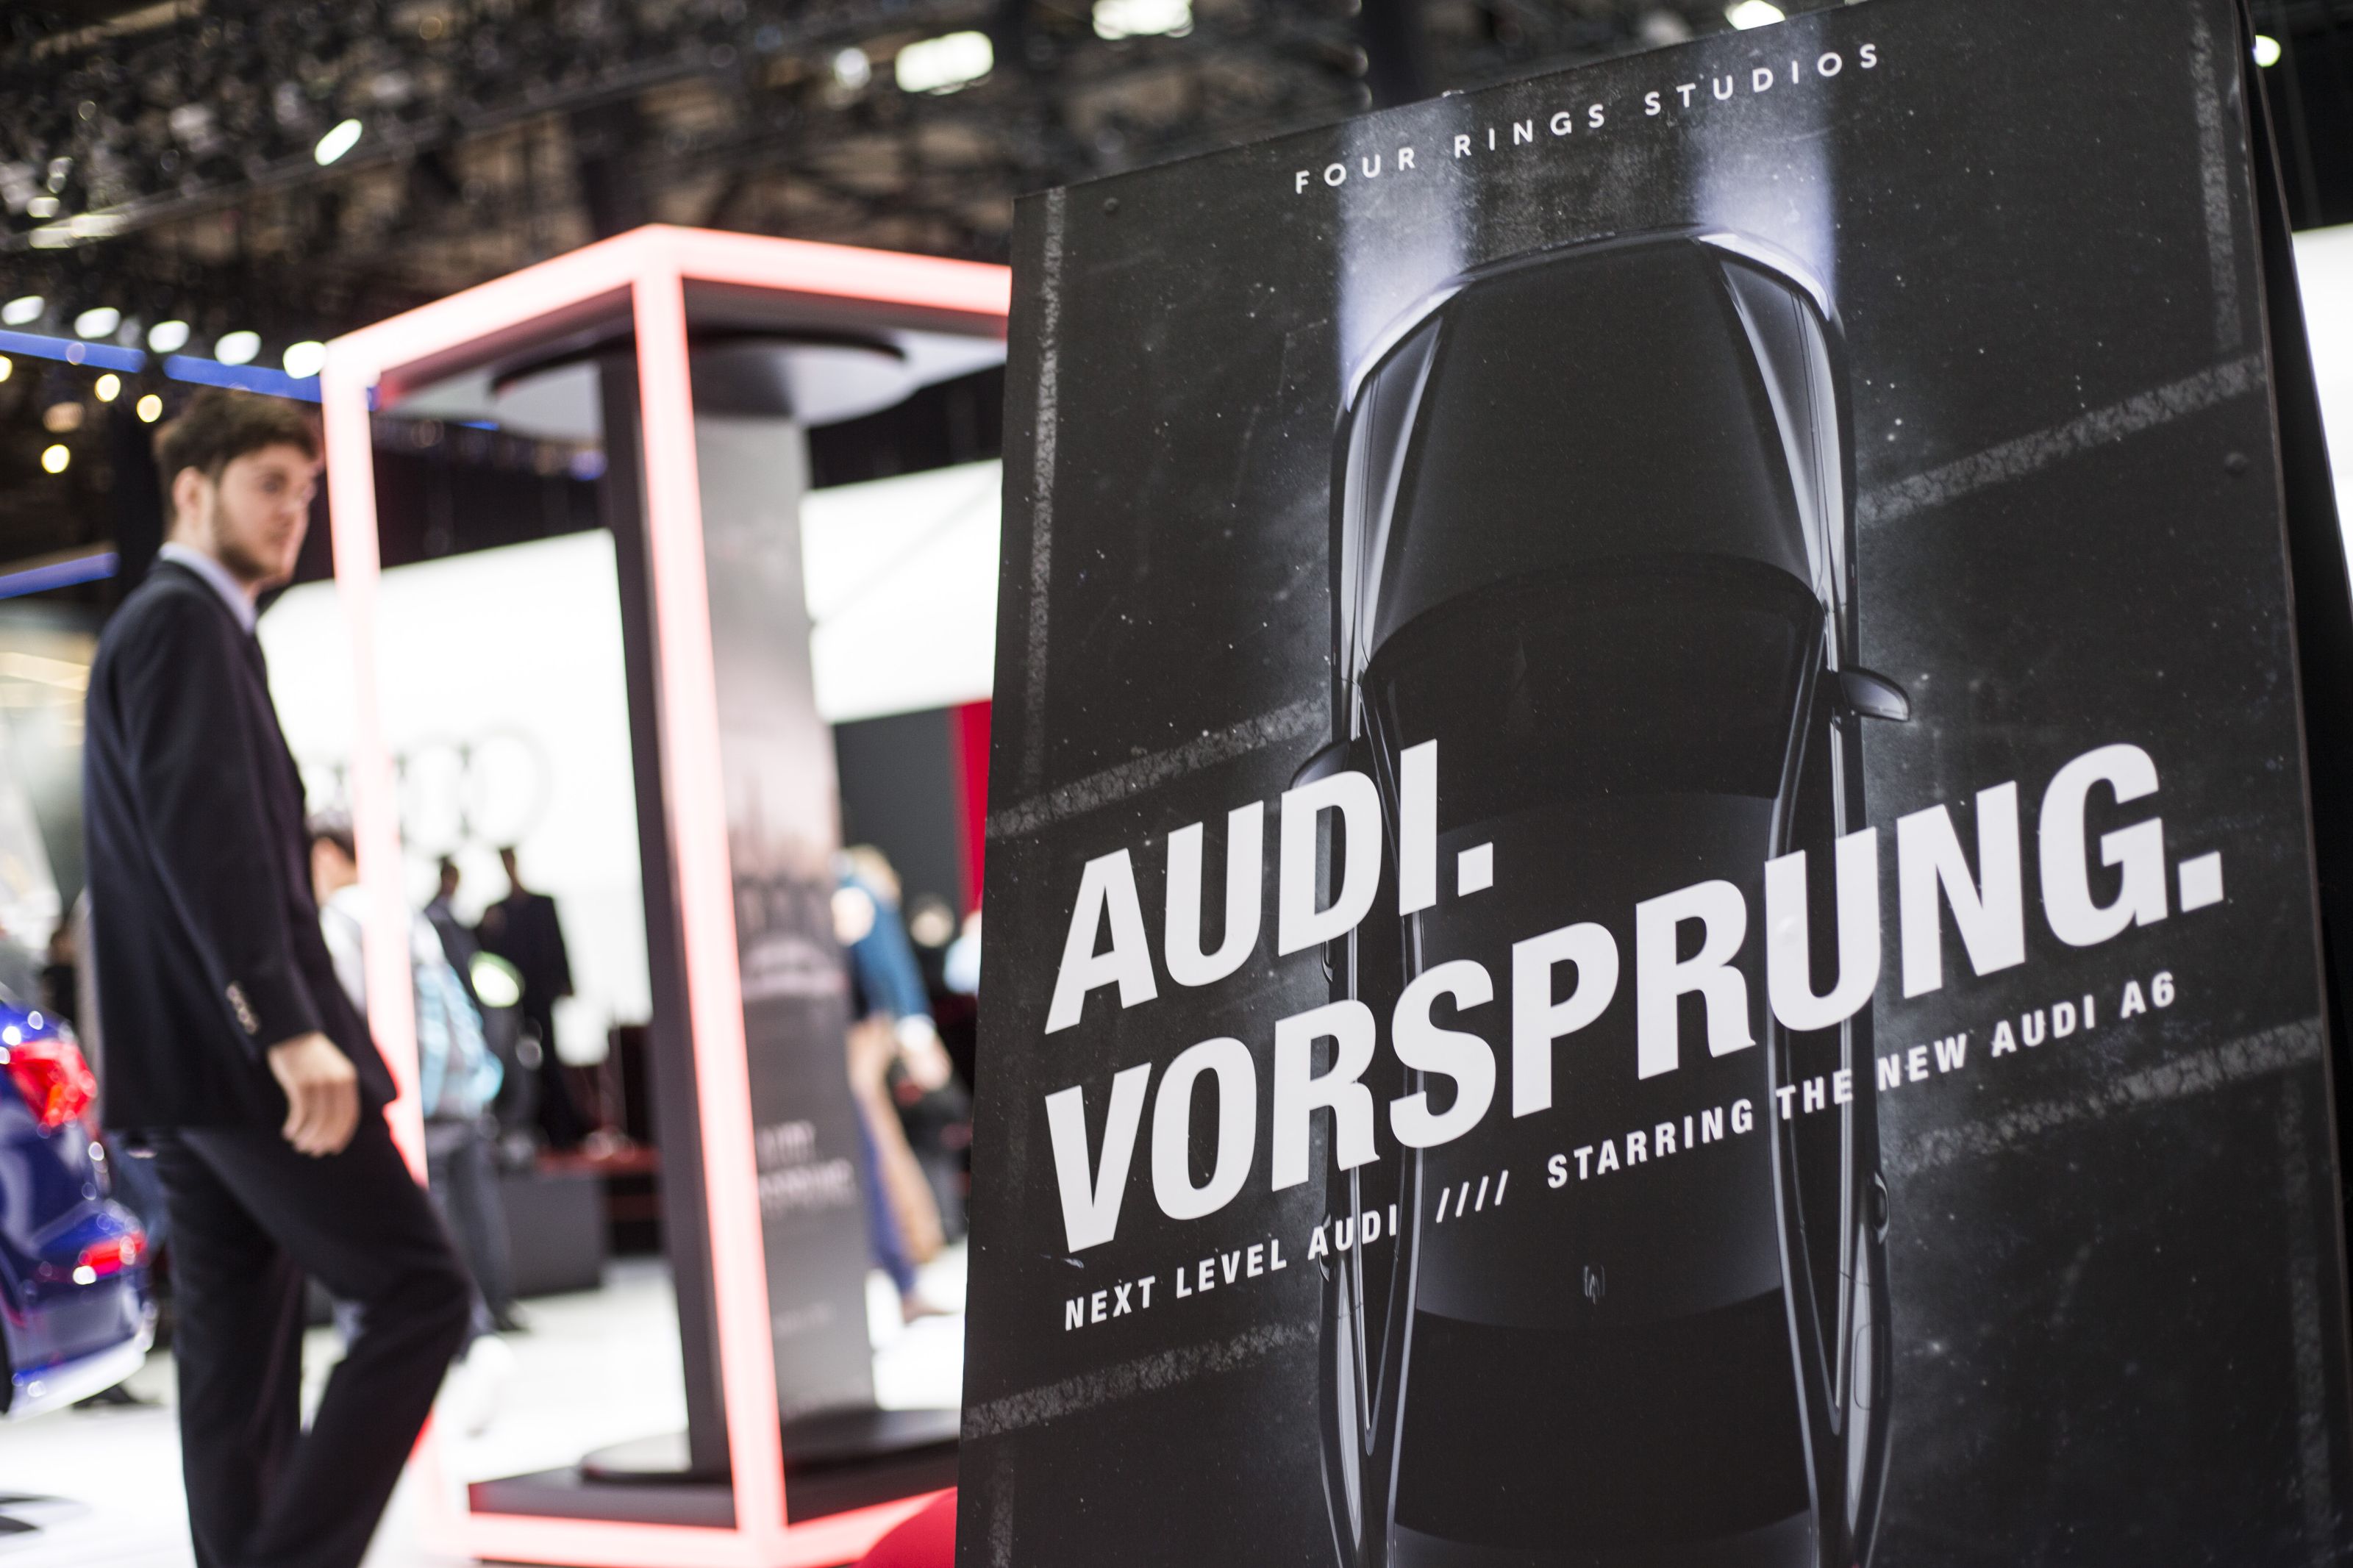 Poster that says "Audi. Vorsprung."